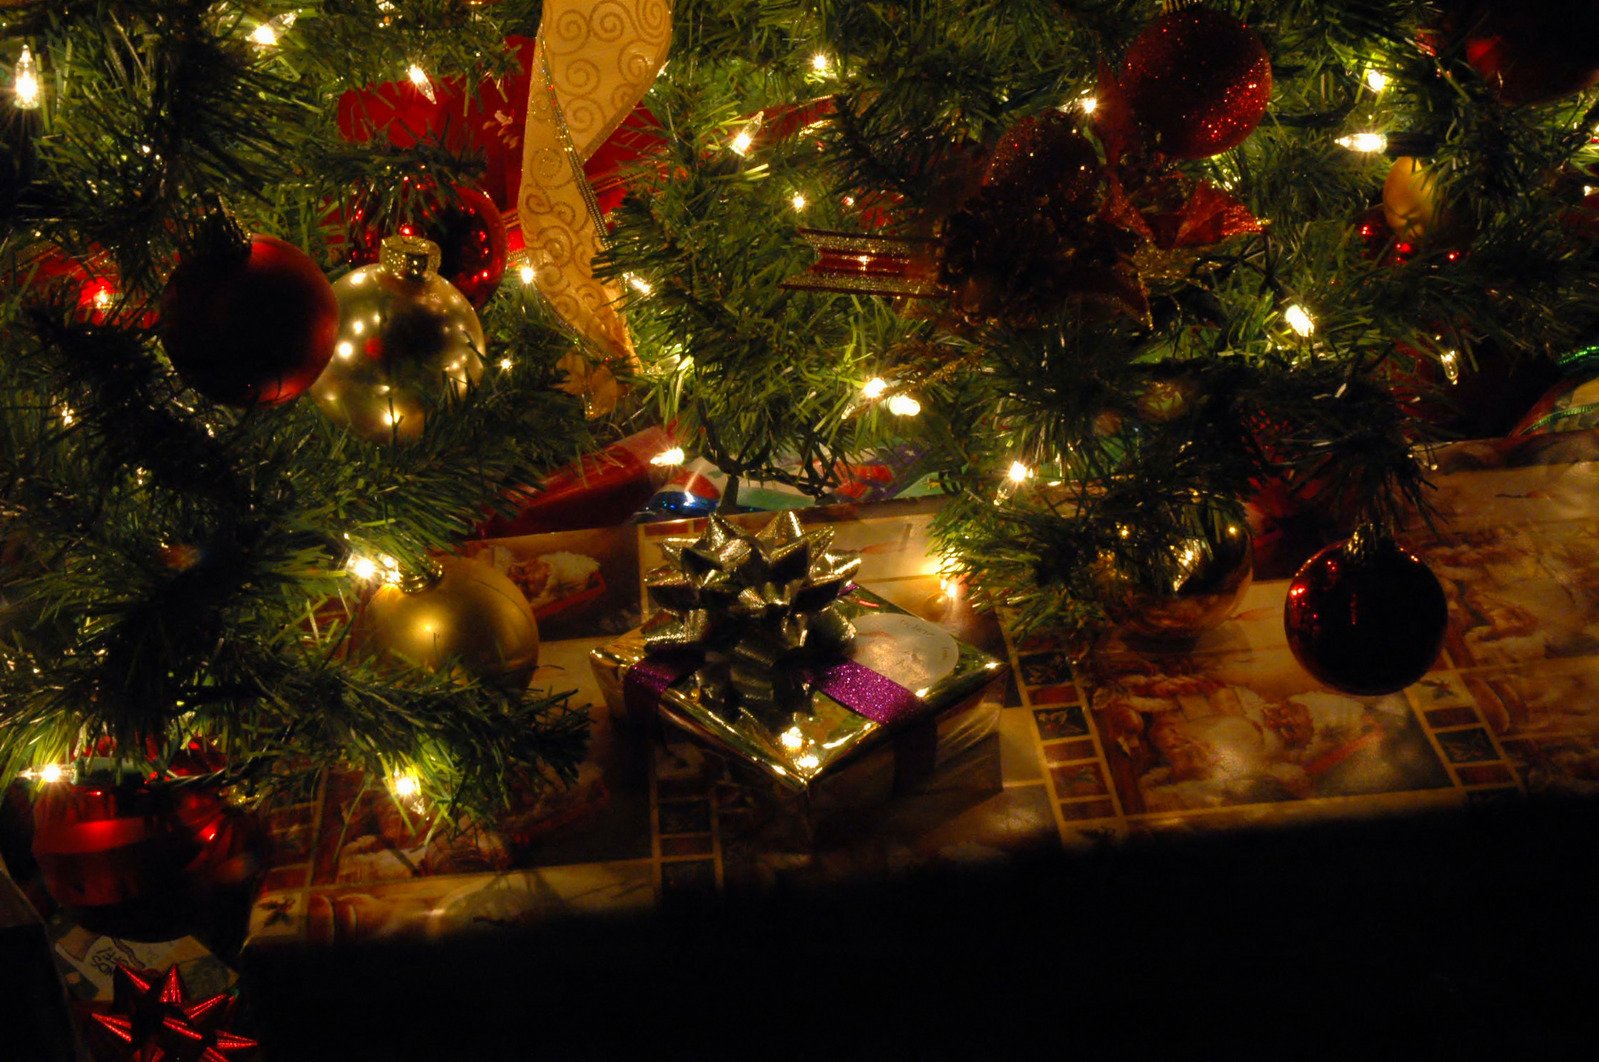 gifts underneath a lit christmas tree on a dark floor